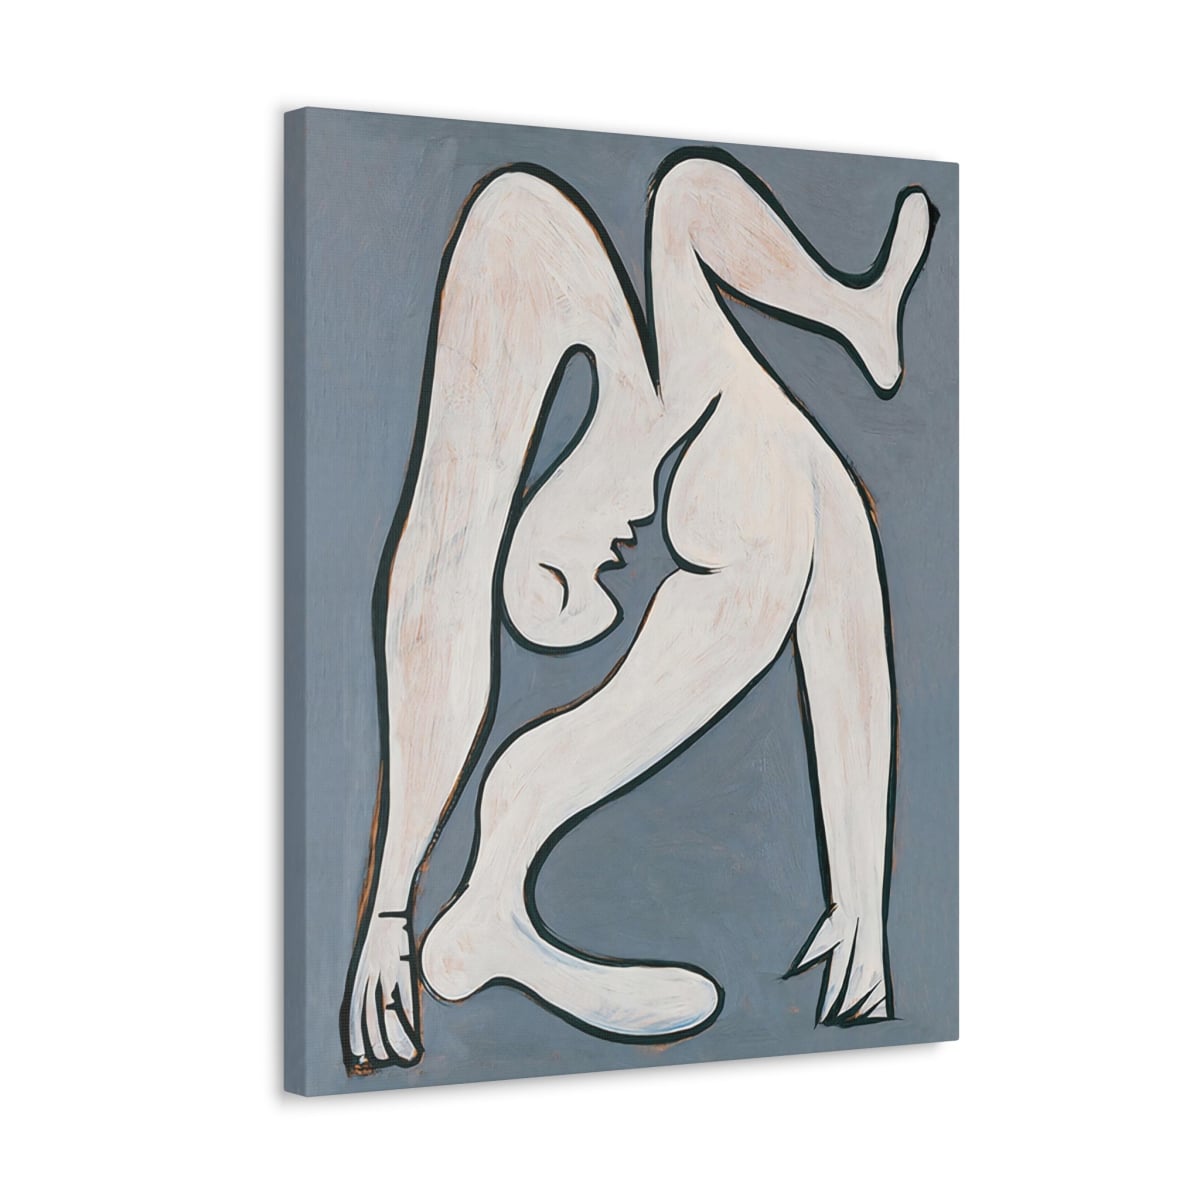 Pablo Picasso Acrobat Canvas Gallery Wrap